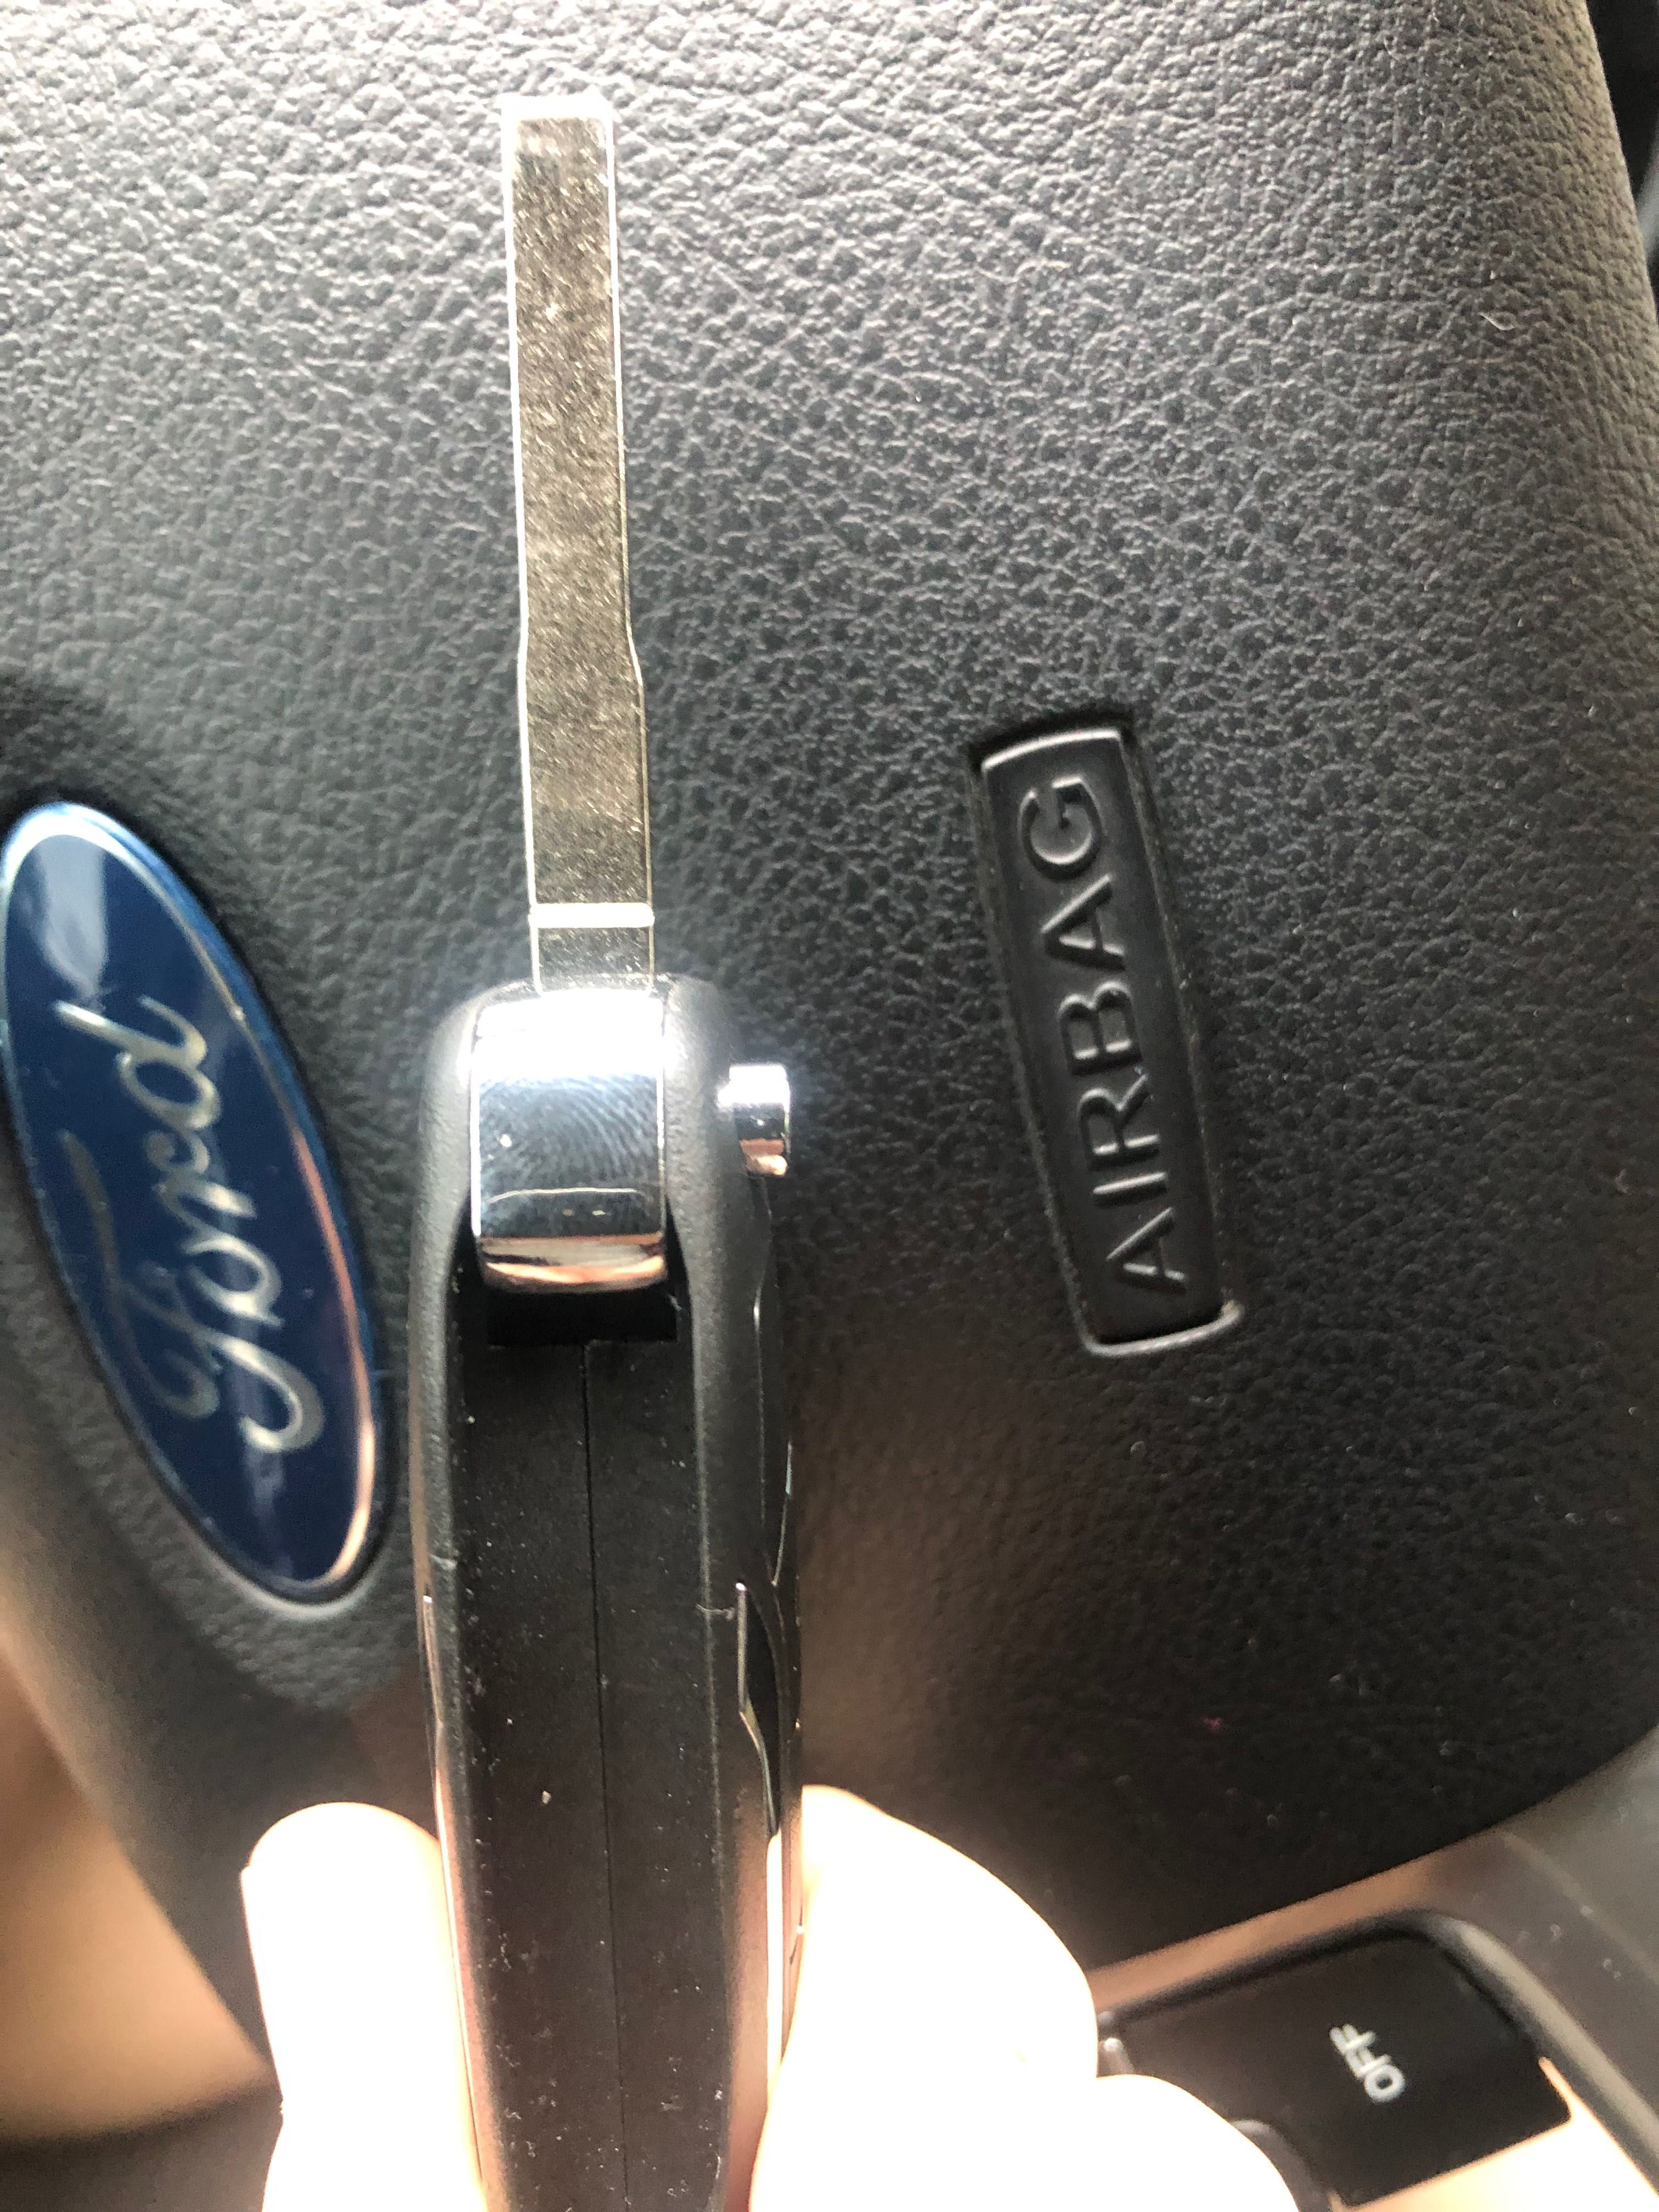 Ключ новий для Ford mondeo,fiesta,focus,fusion HU101 433Mhz 4d63 80bit